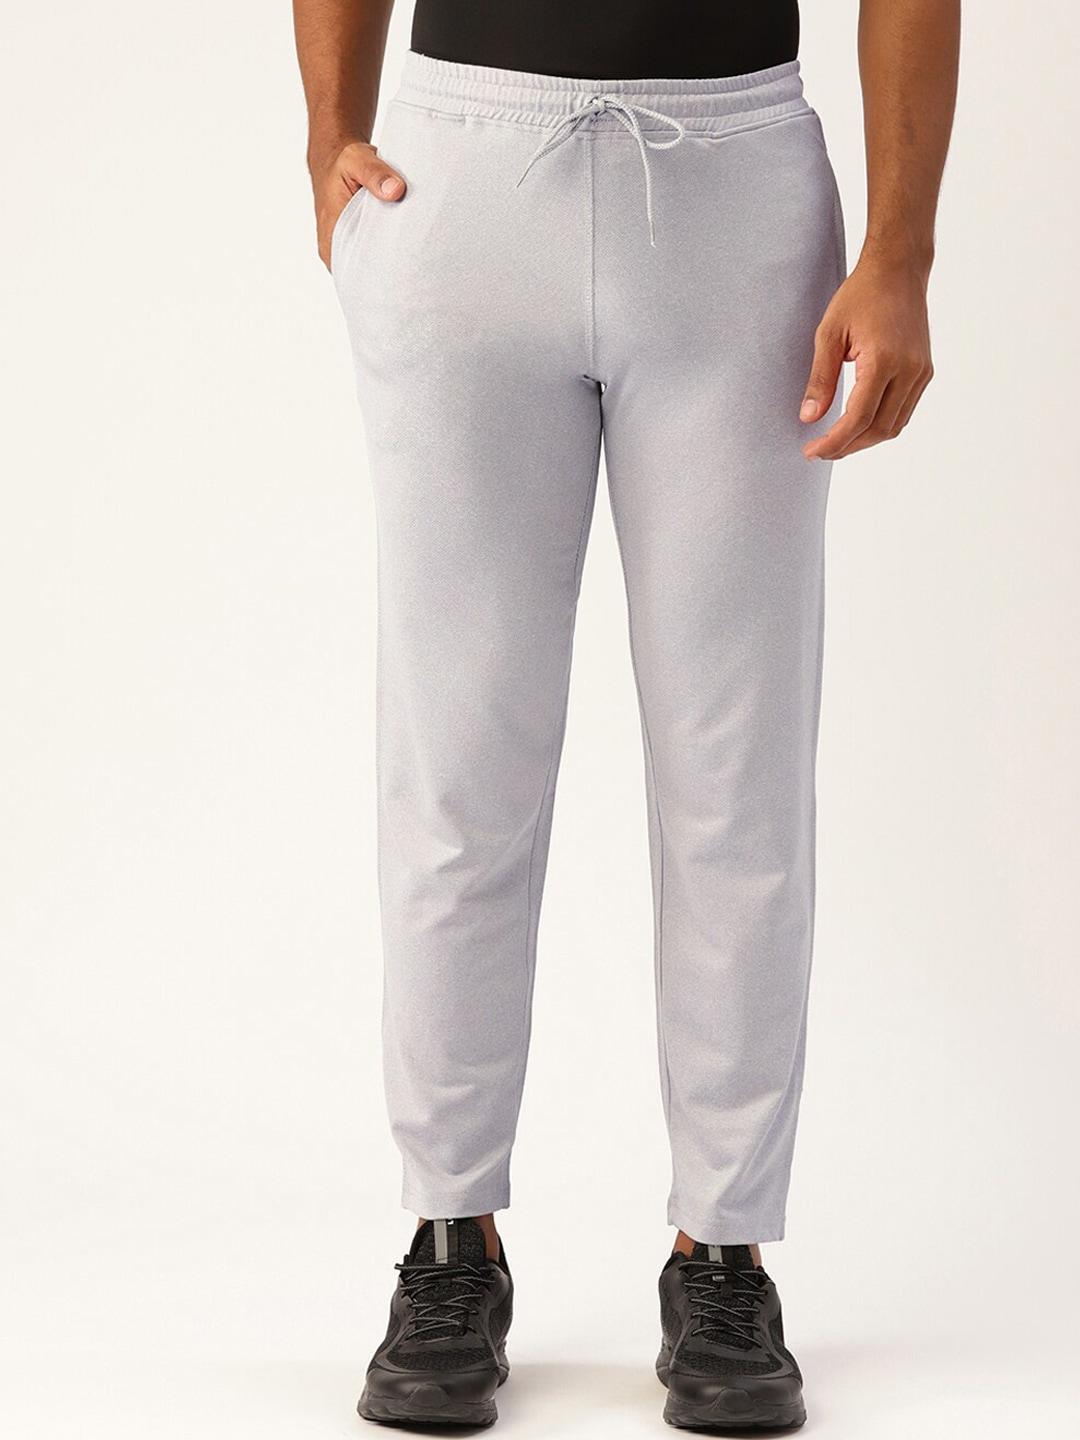 armisto-men-straight-fit-dry-fit-sports-track-pants